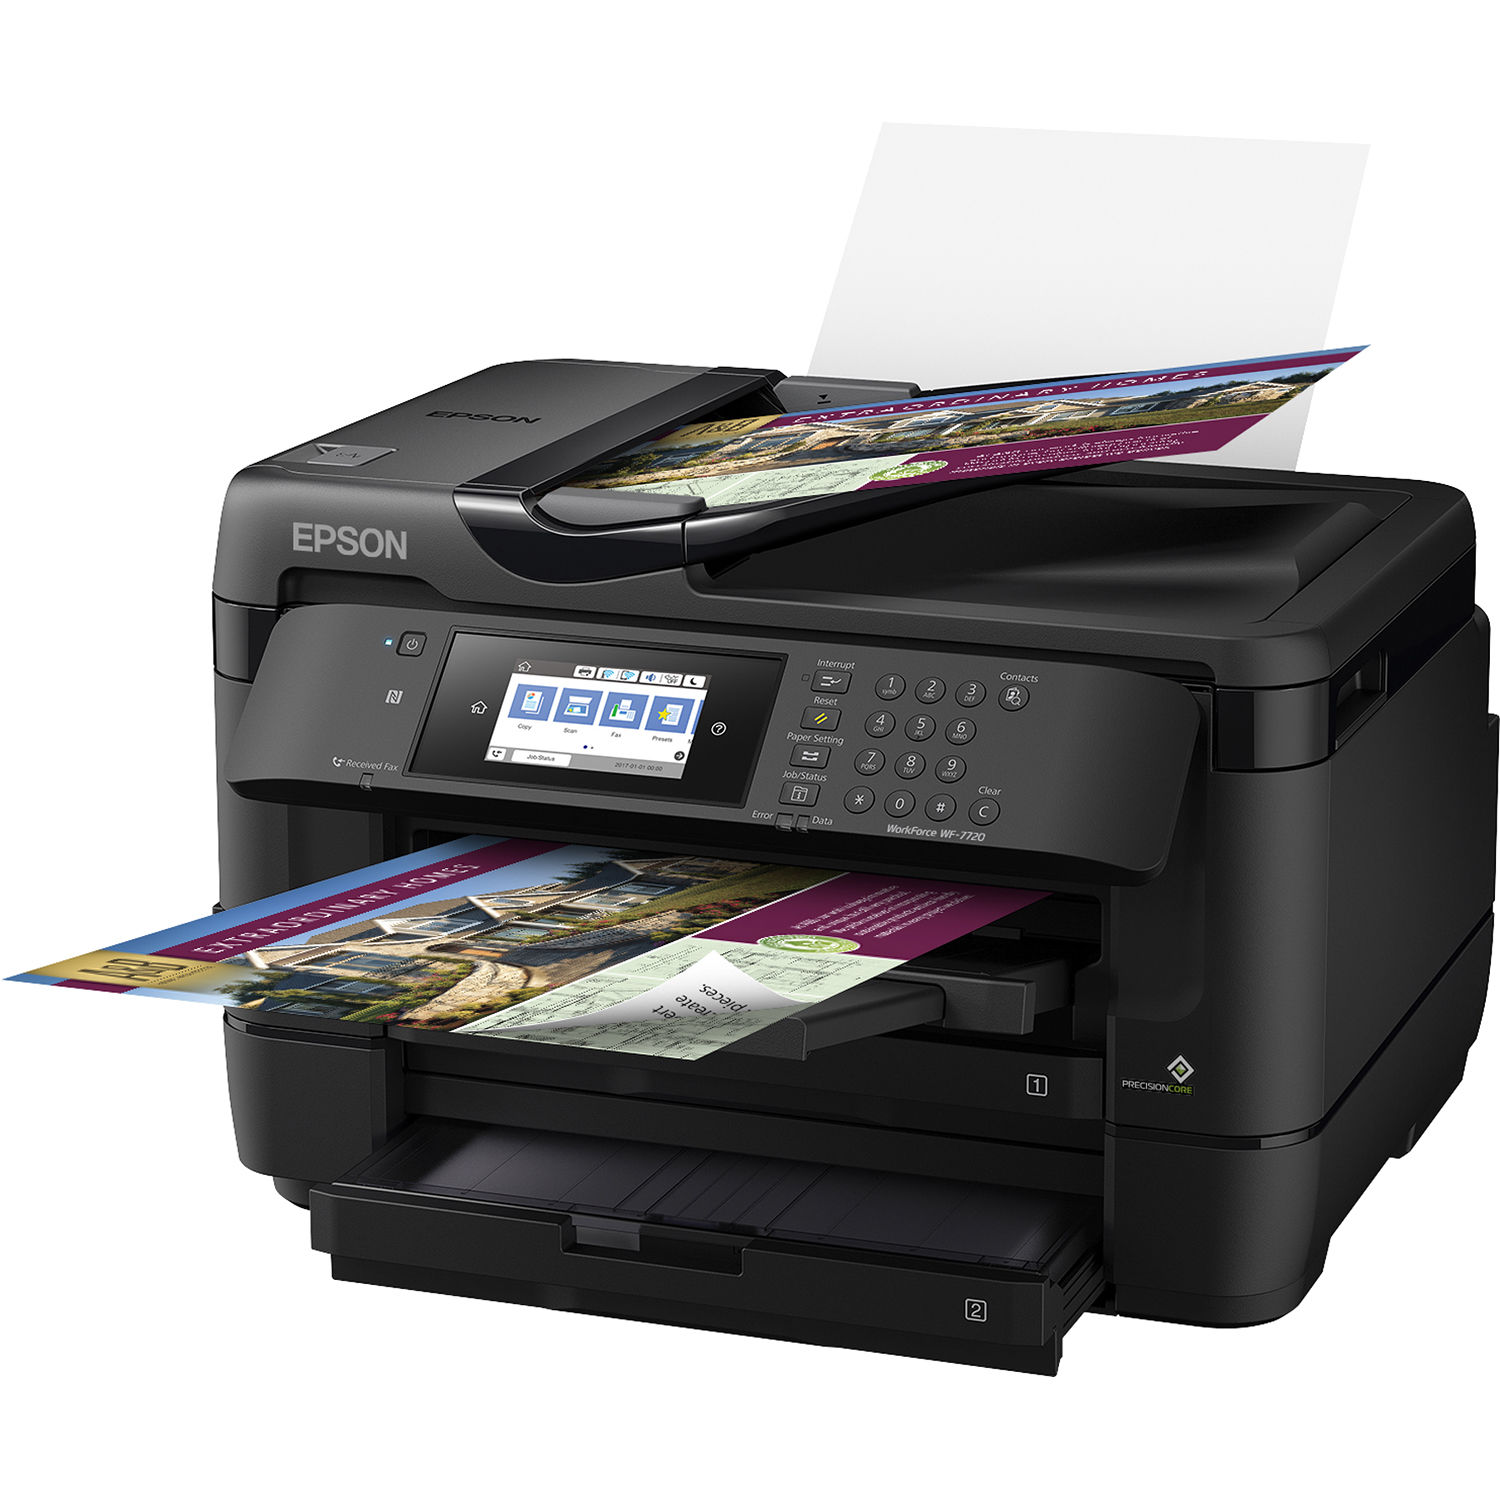 Epson WorkForce WF-7720 Wide-format All-in-One Printer